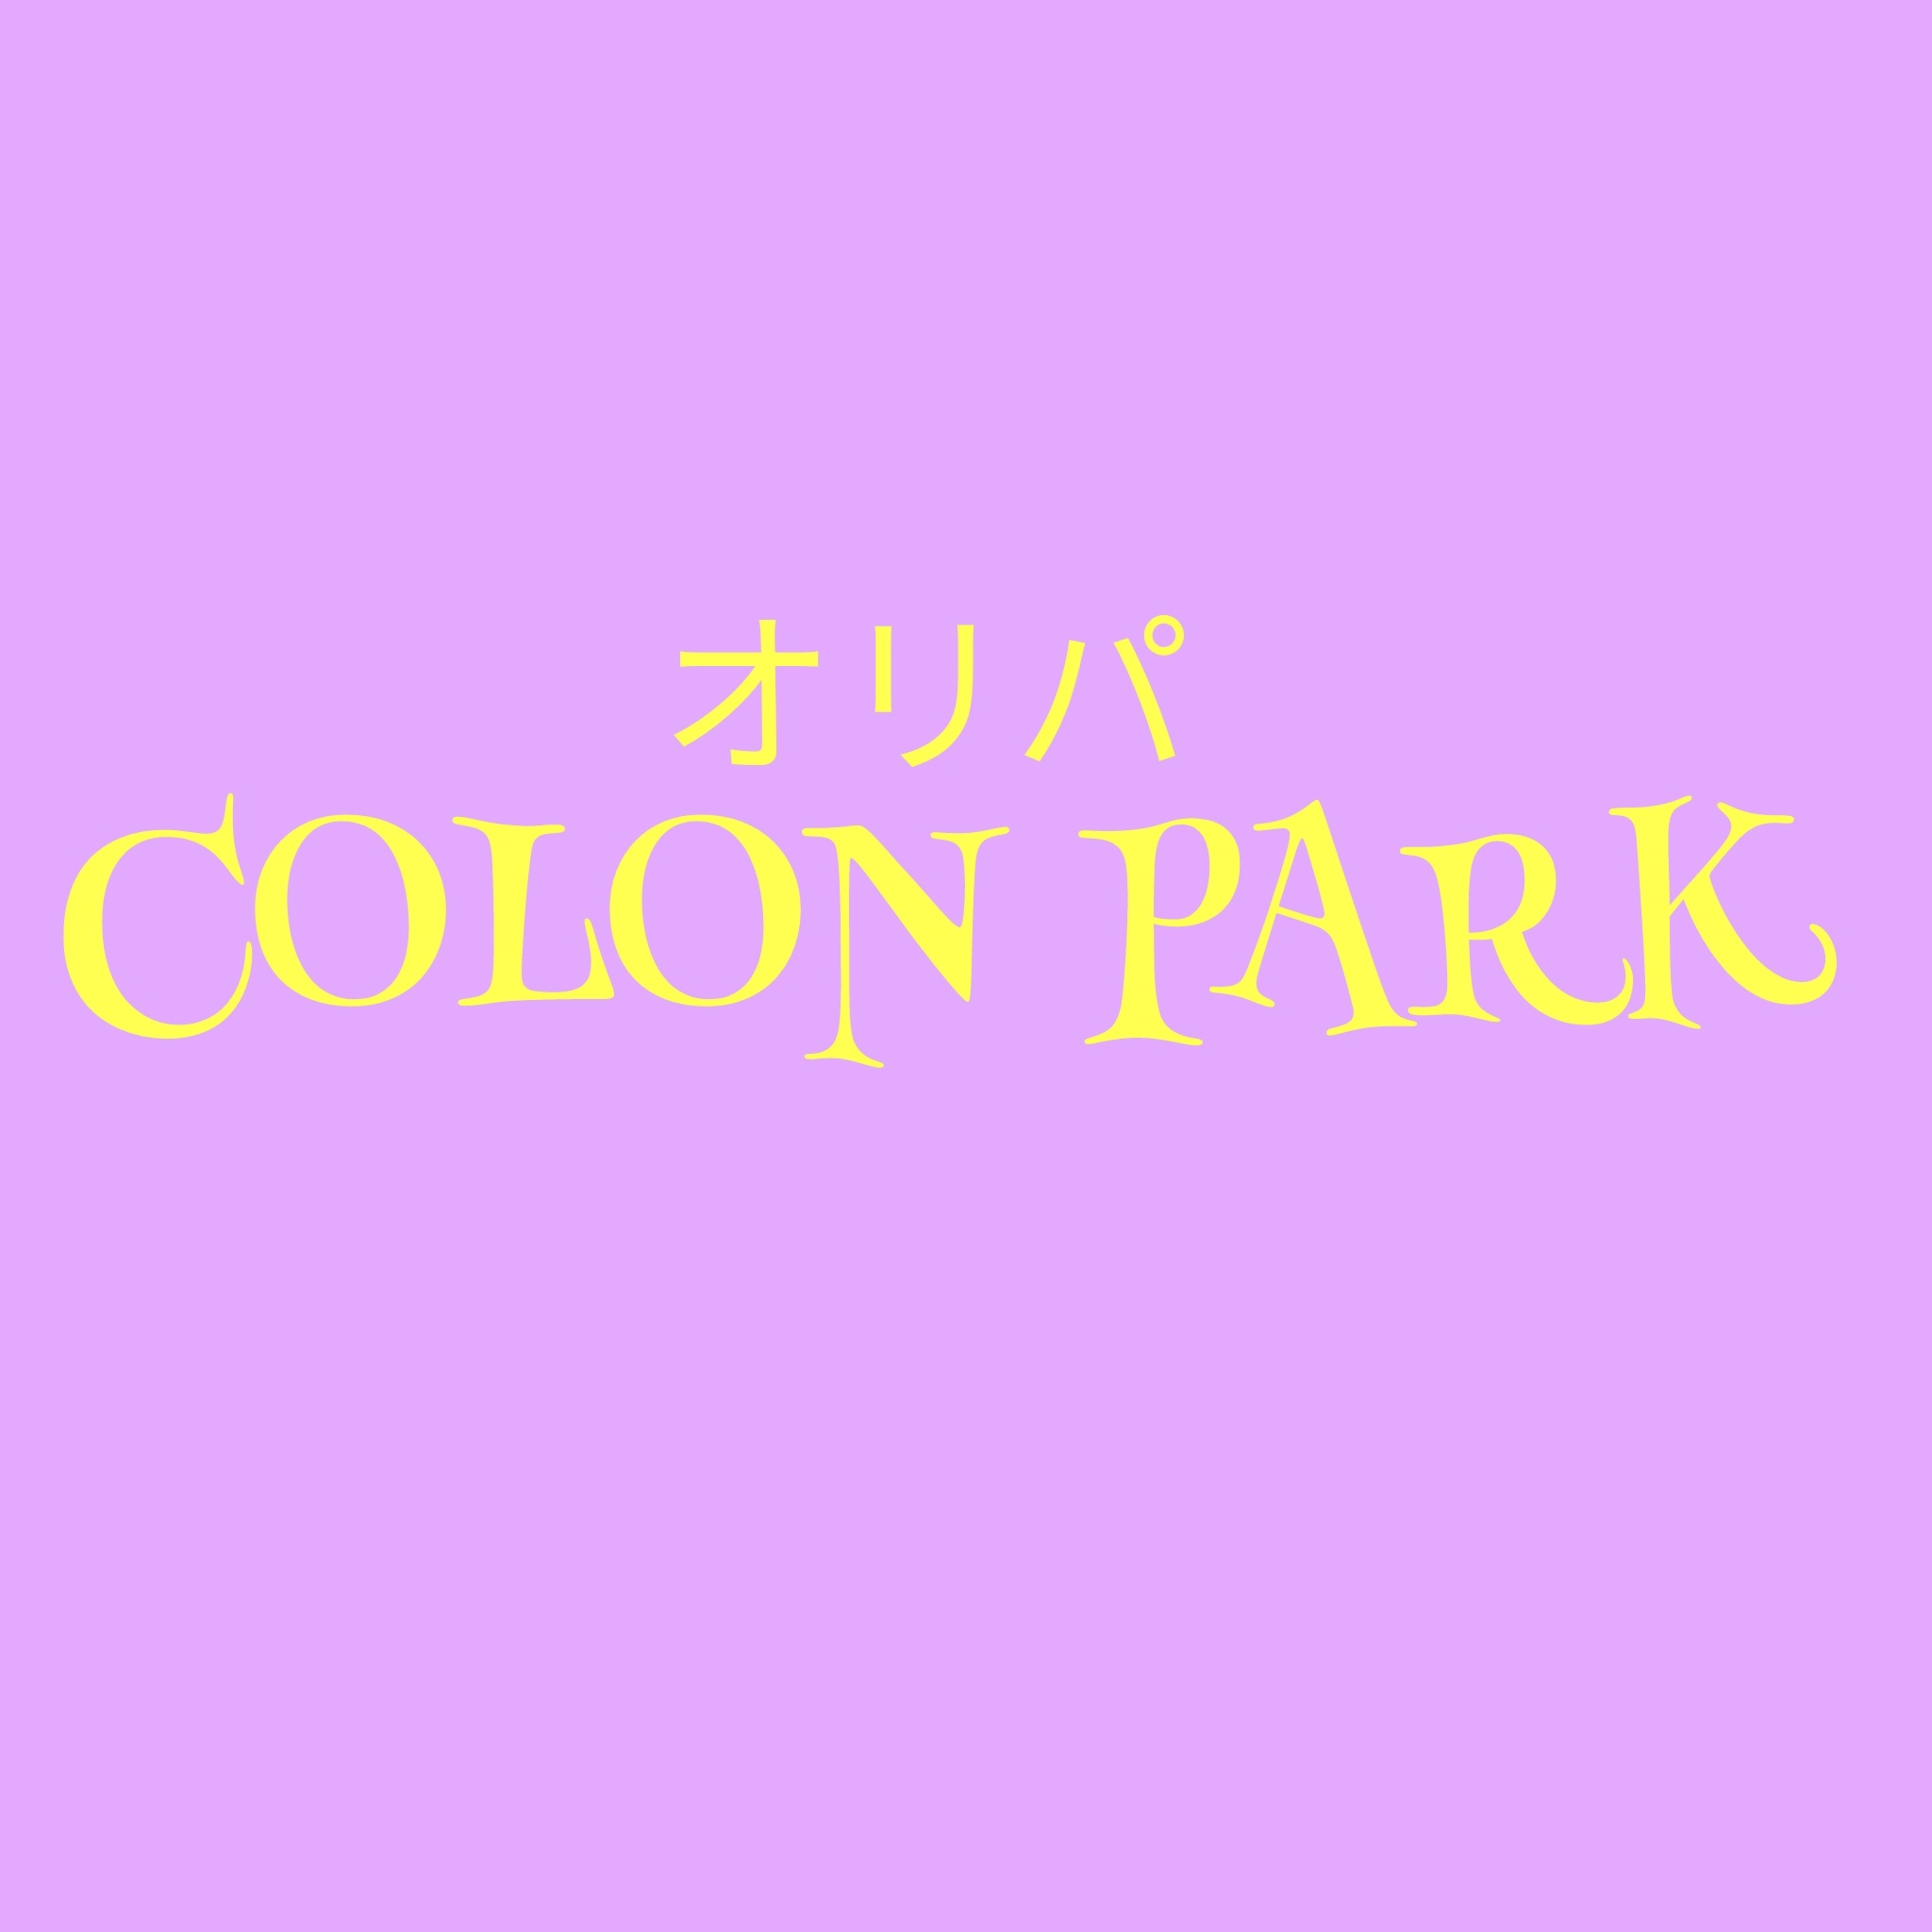 colonpark